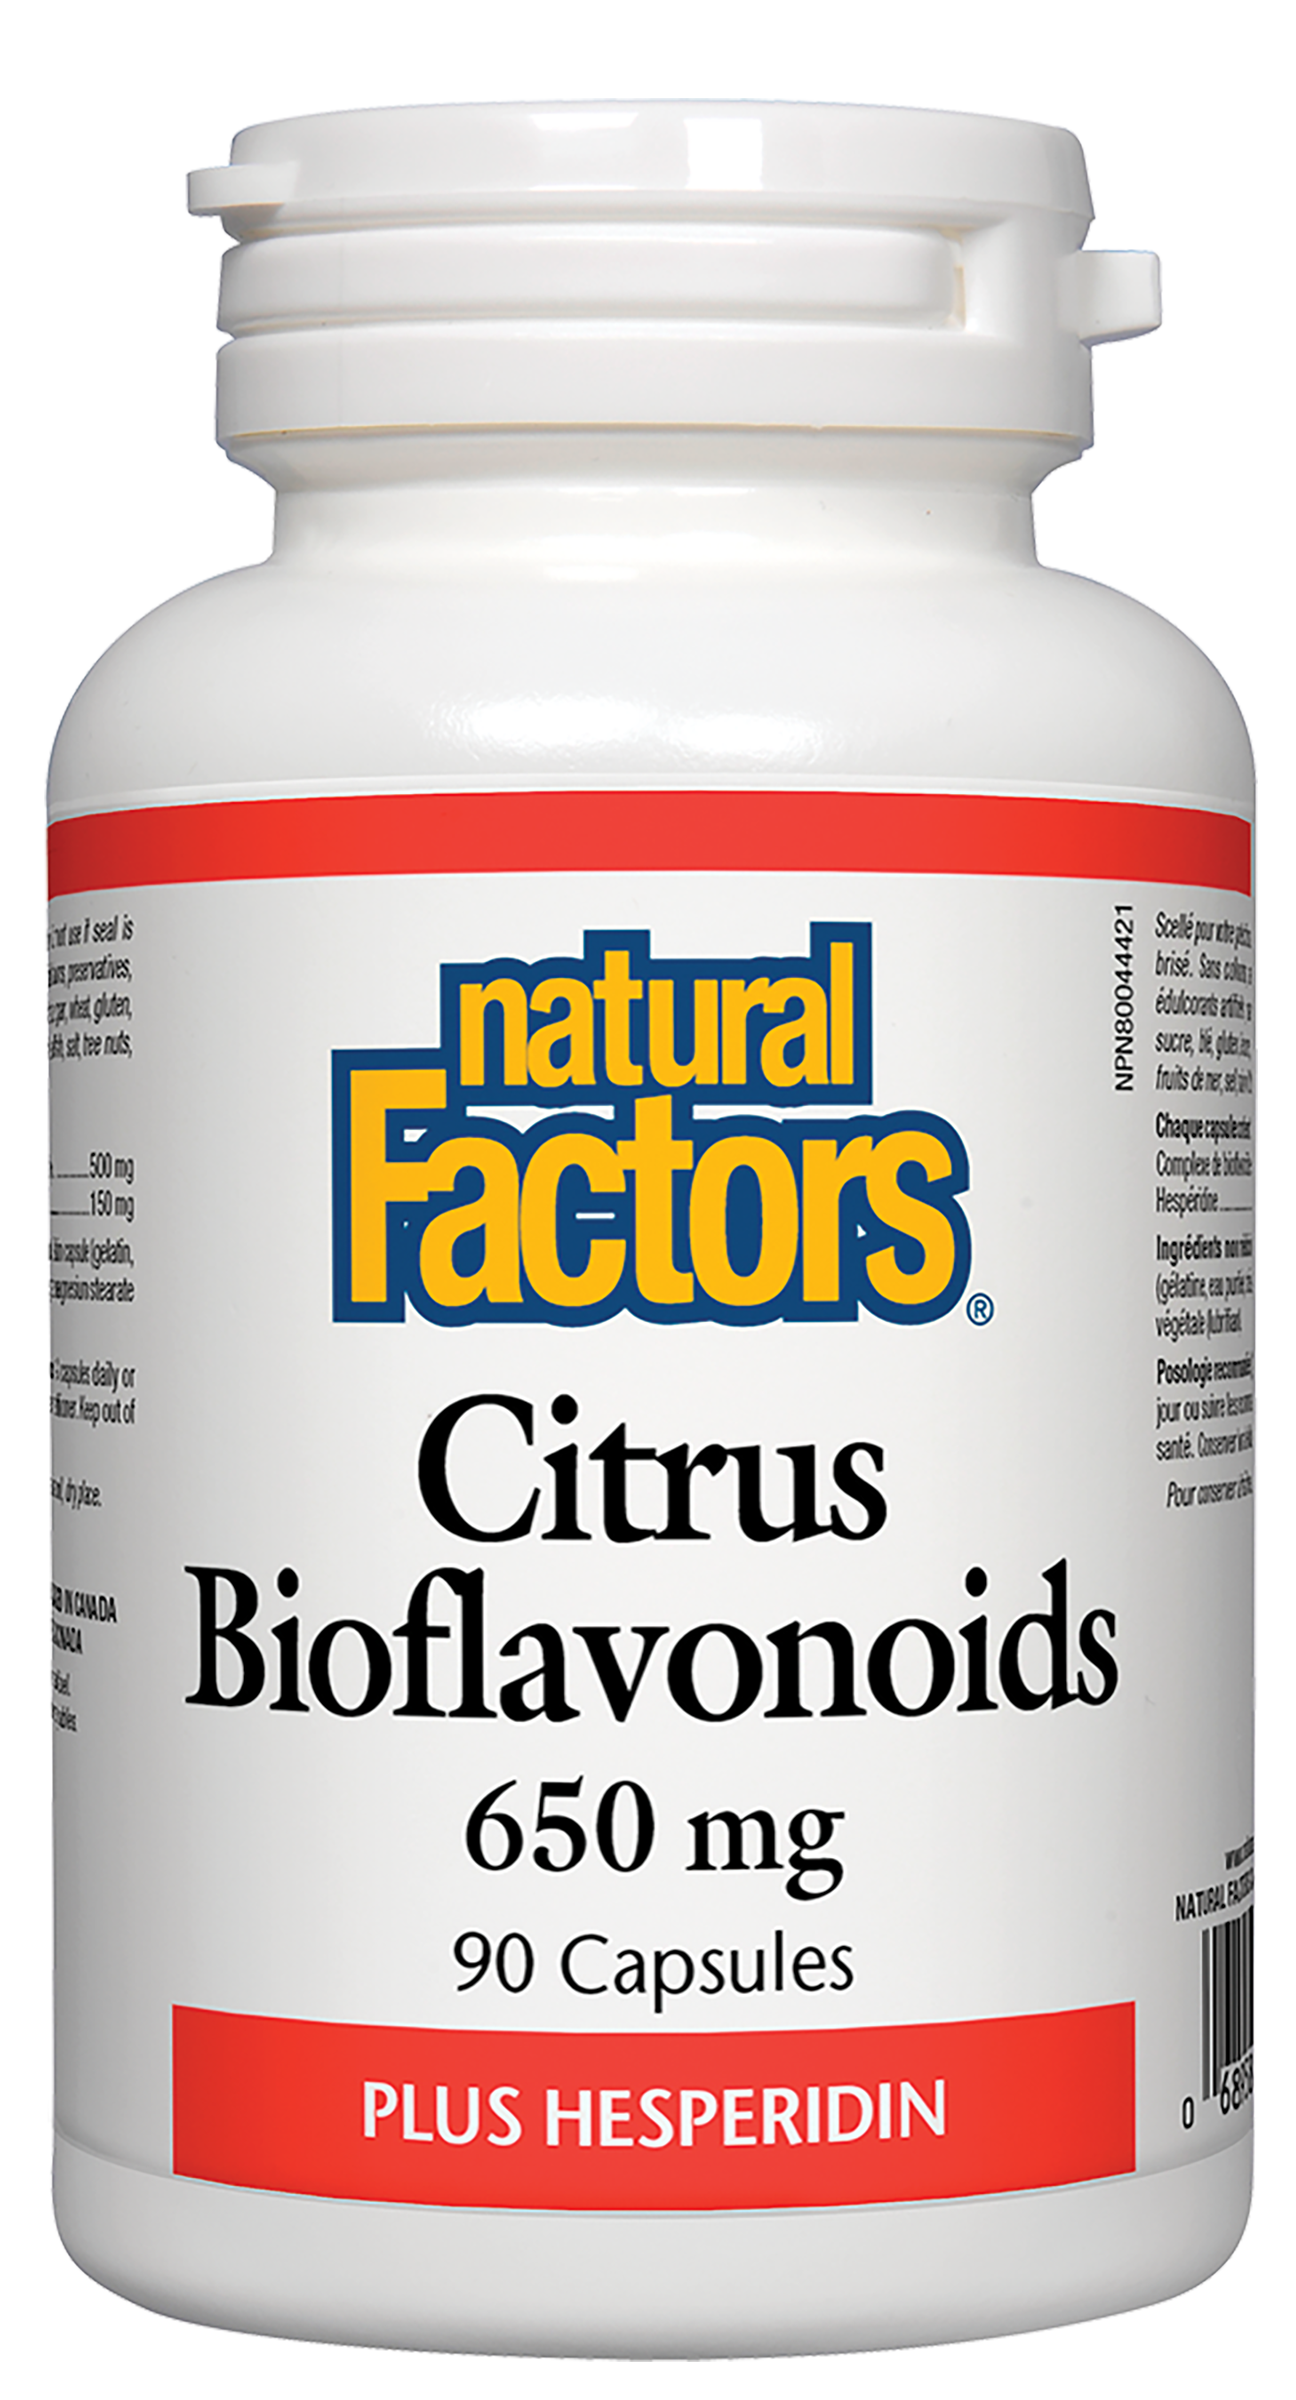 Citrus bioflavonoids and hair health